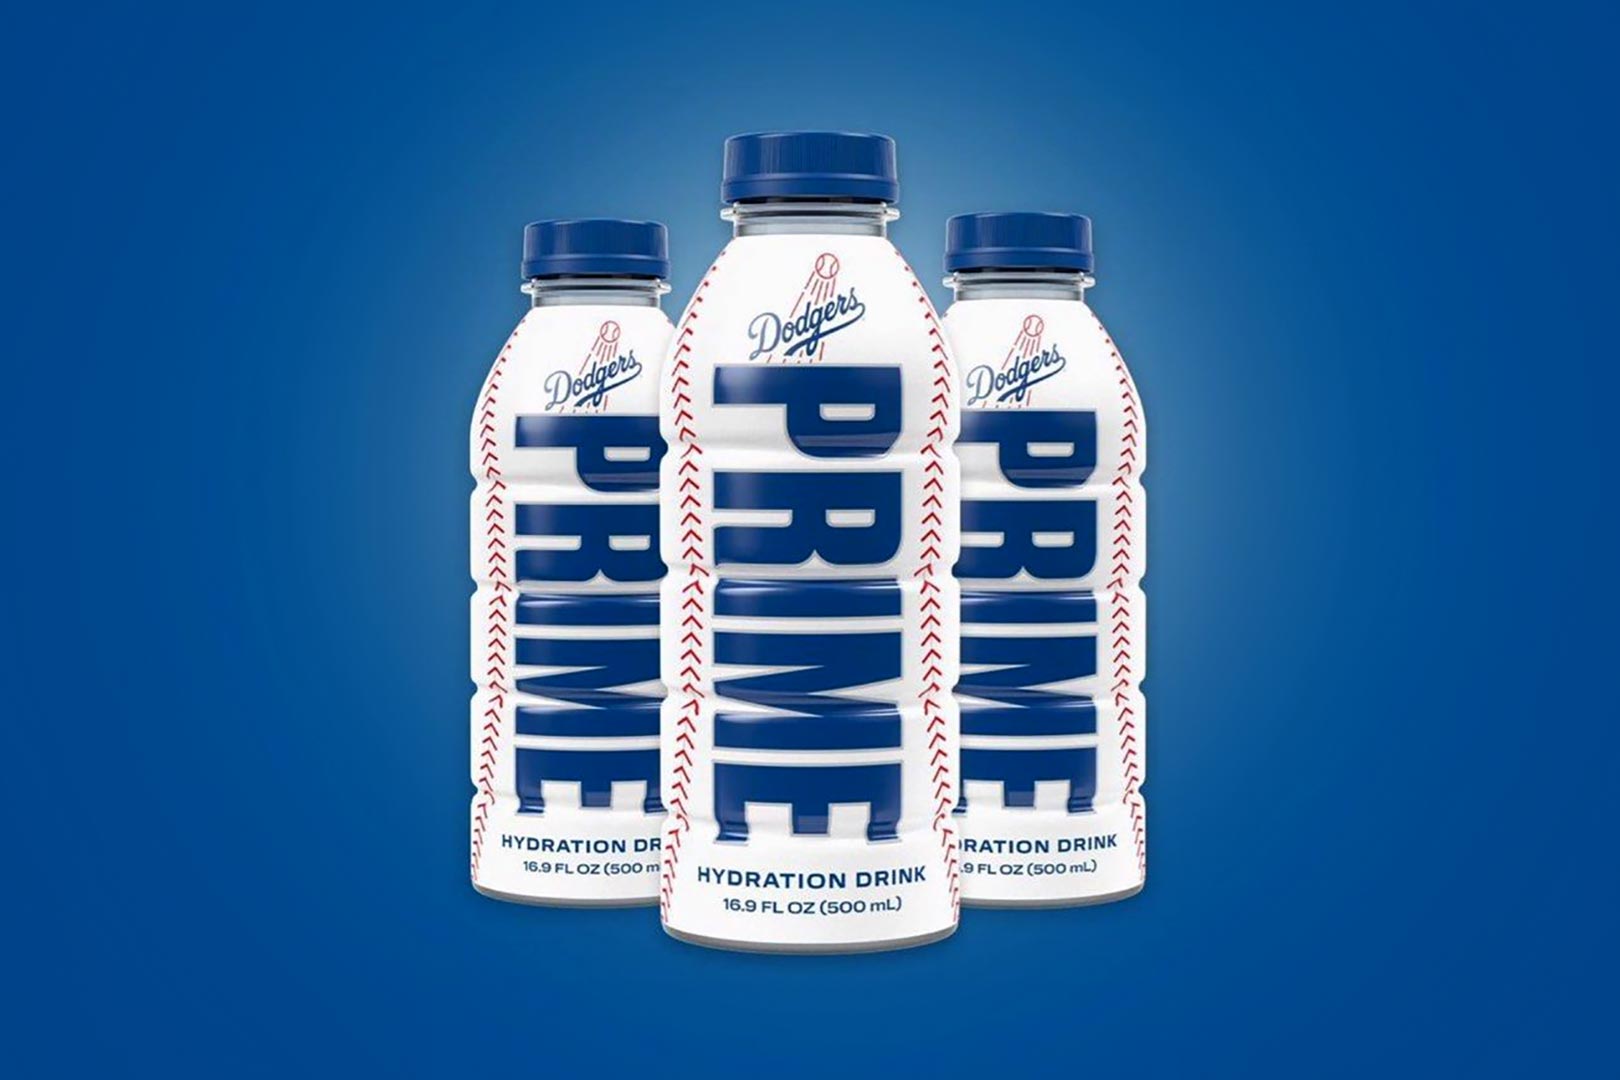 Dodgers Prime Hydration Drink